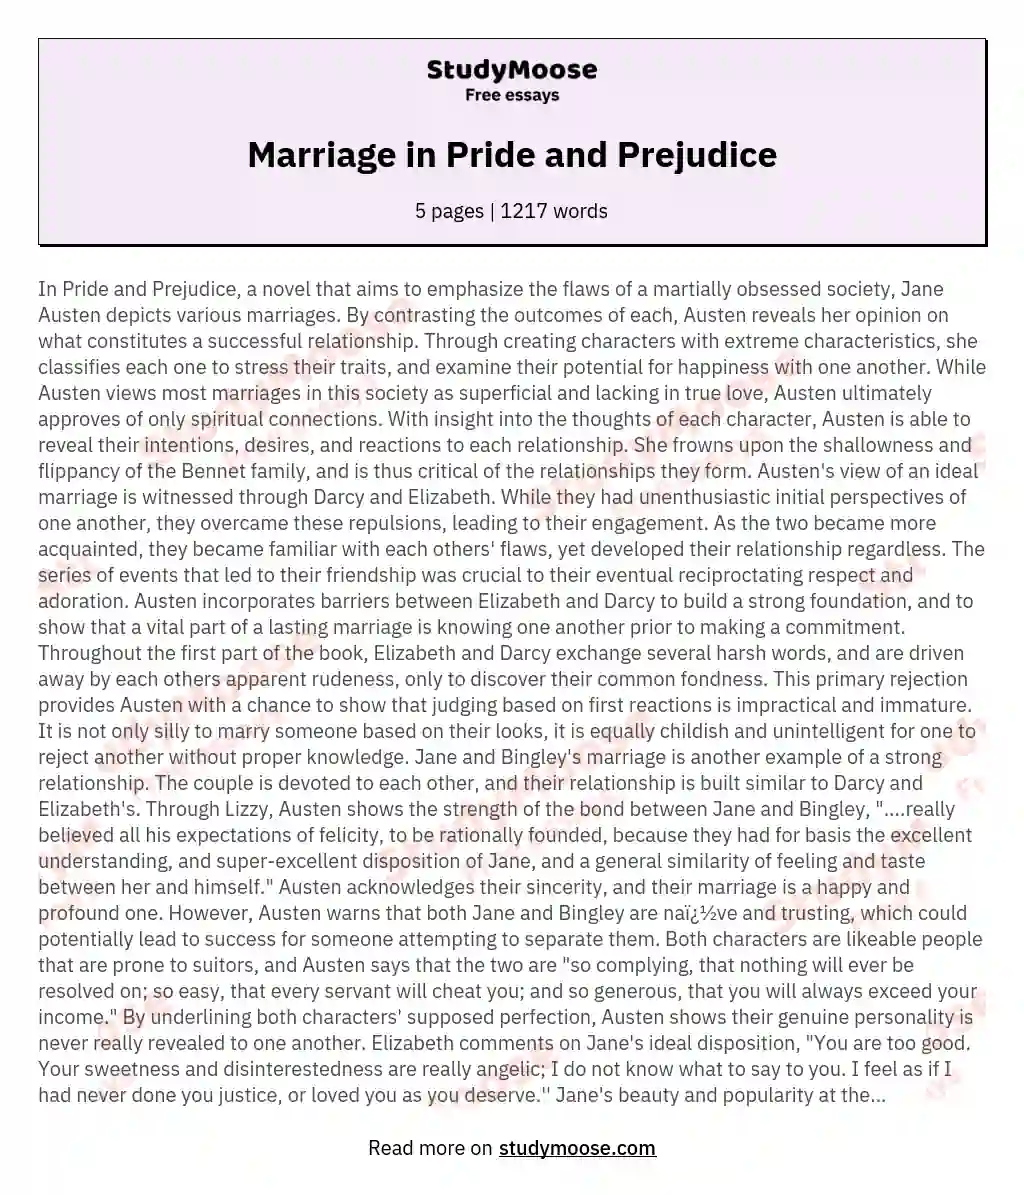 Marriage in Pride and Prejudice essay